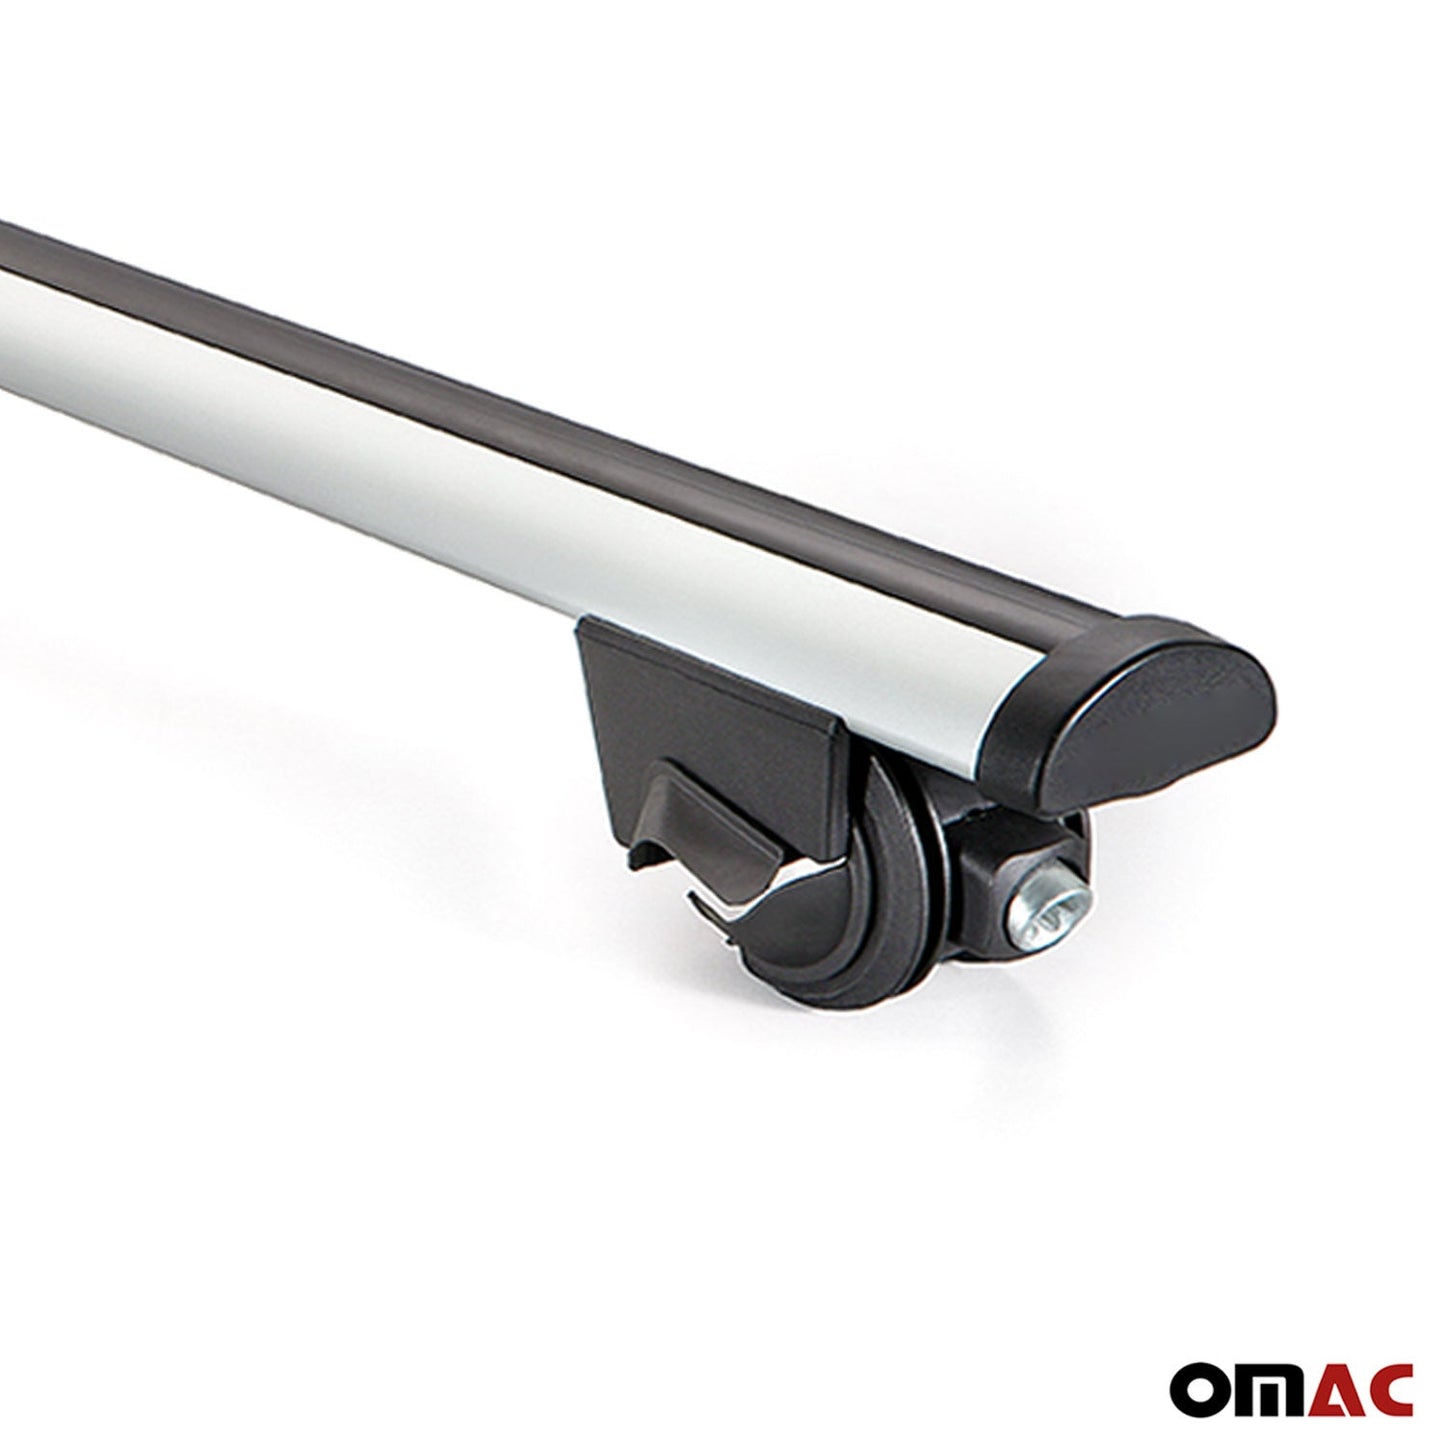 OMAC Roof Rack Cross Bars Lockable for Honda Accord Tourer 2008-2012 Gray 2Pcs U003896